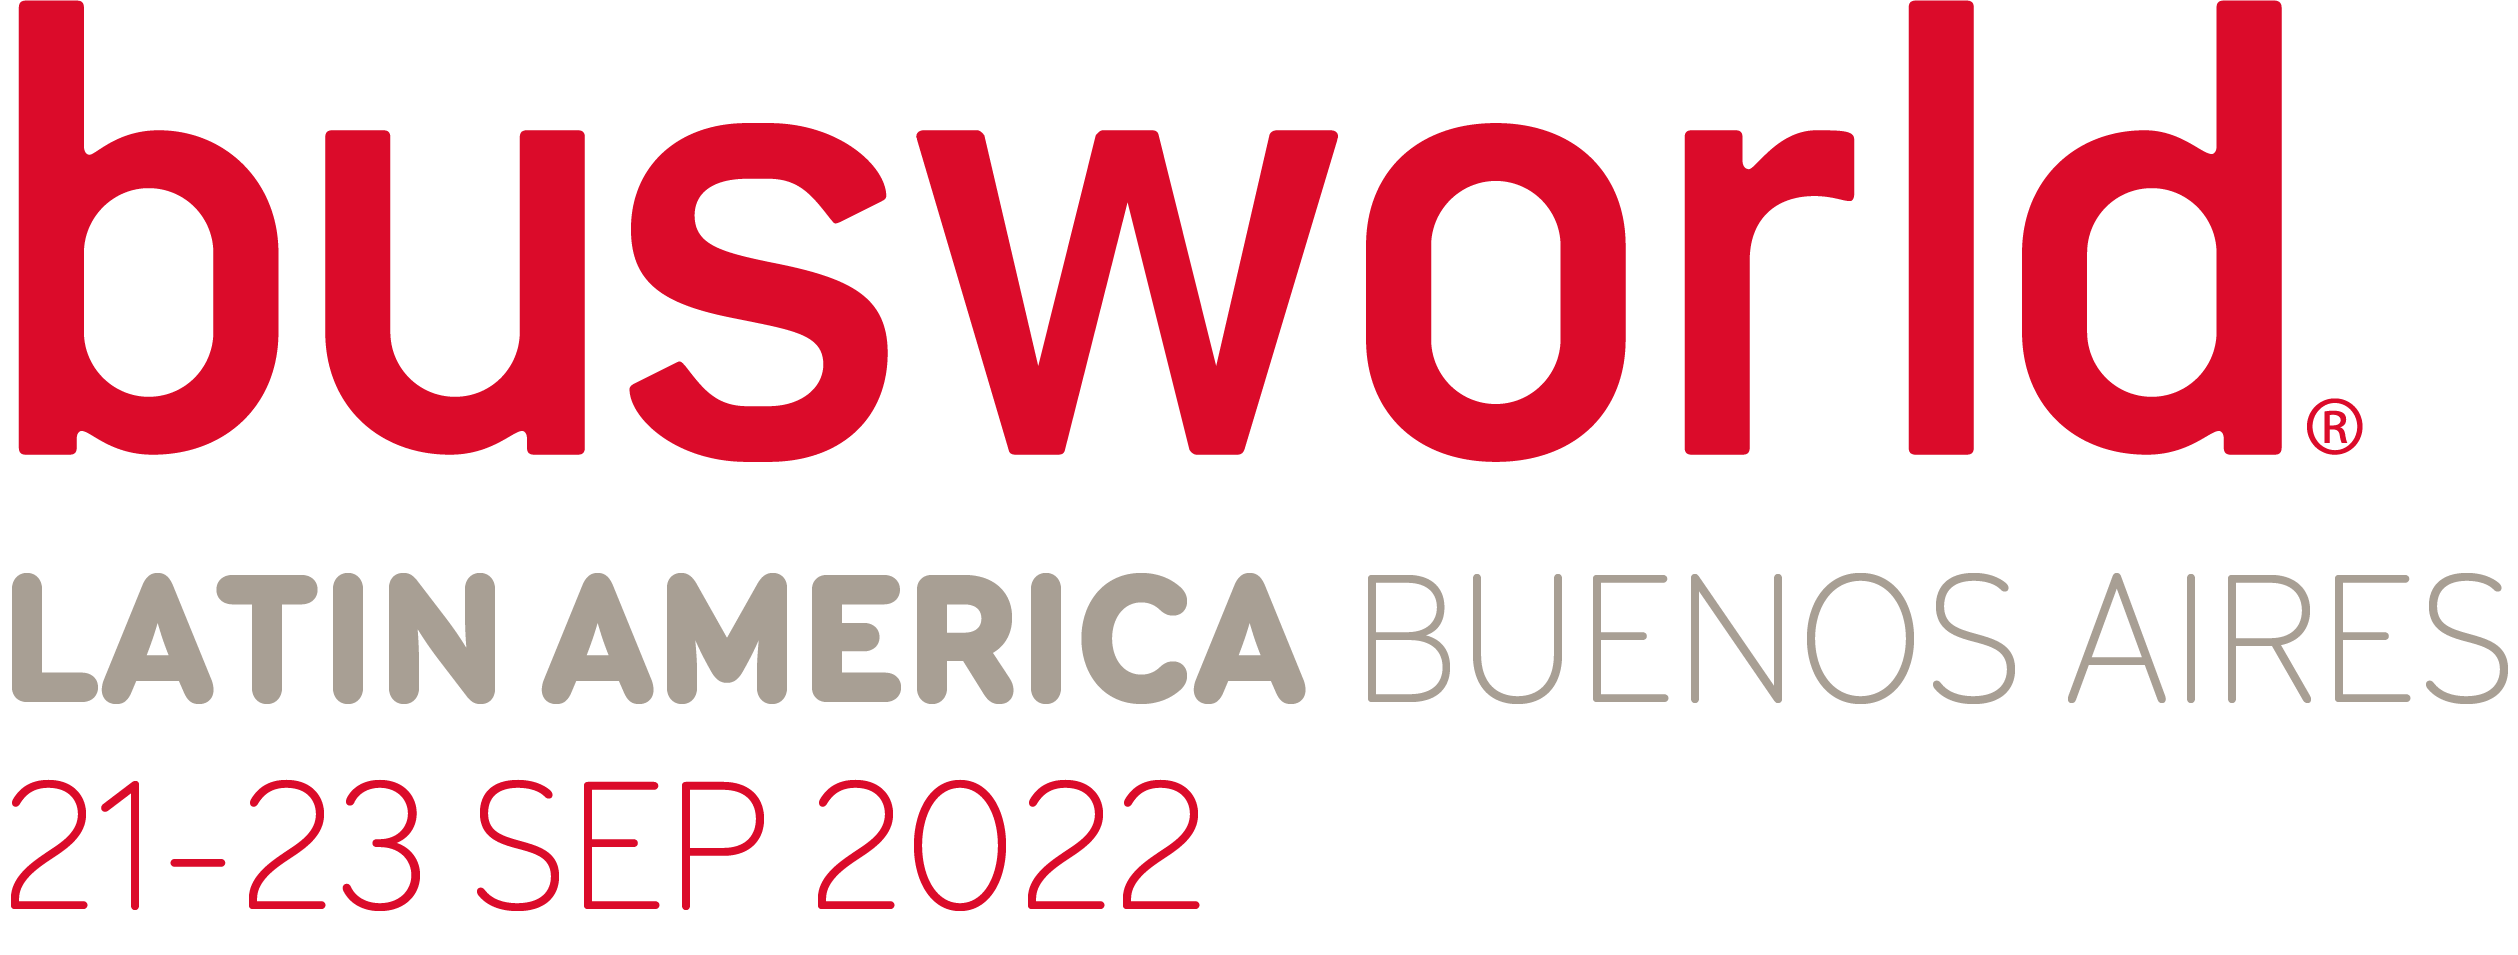 Busworld Latin America 2022 logo